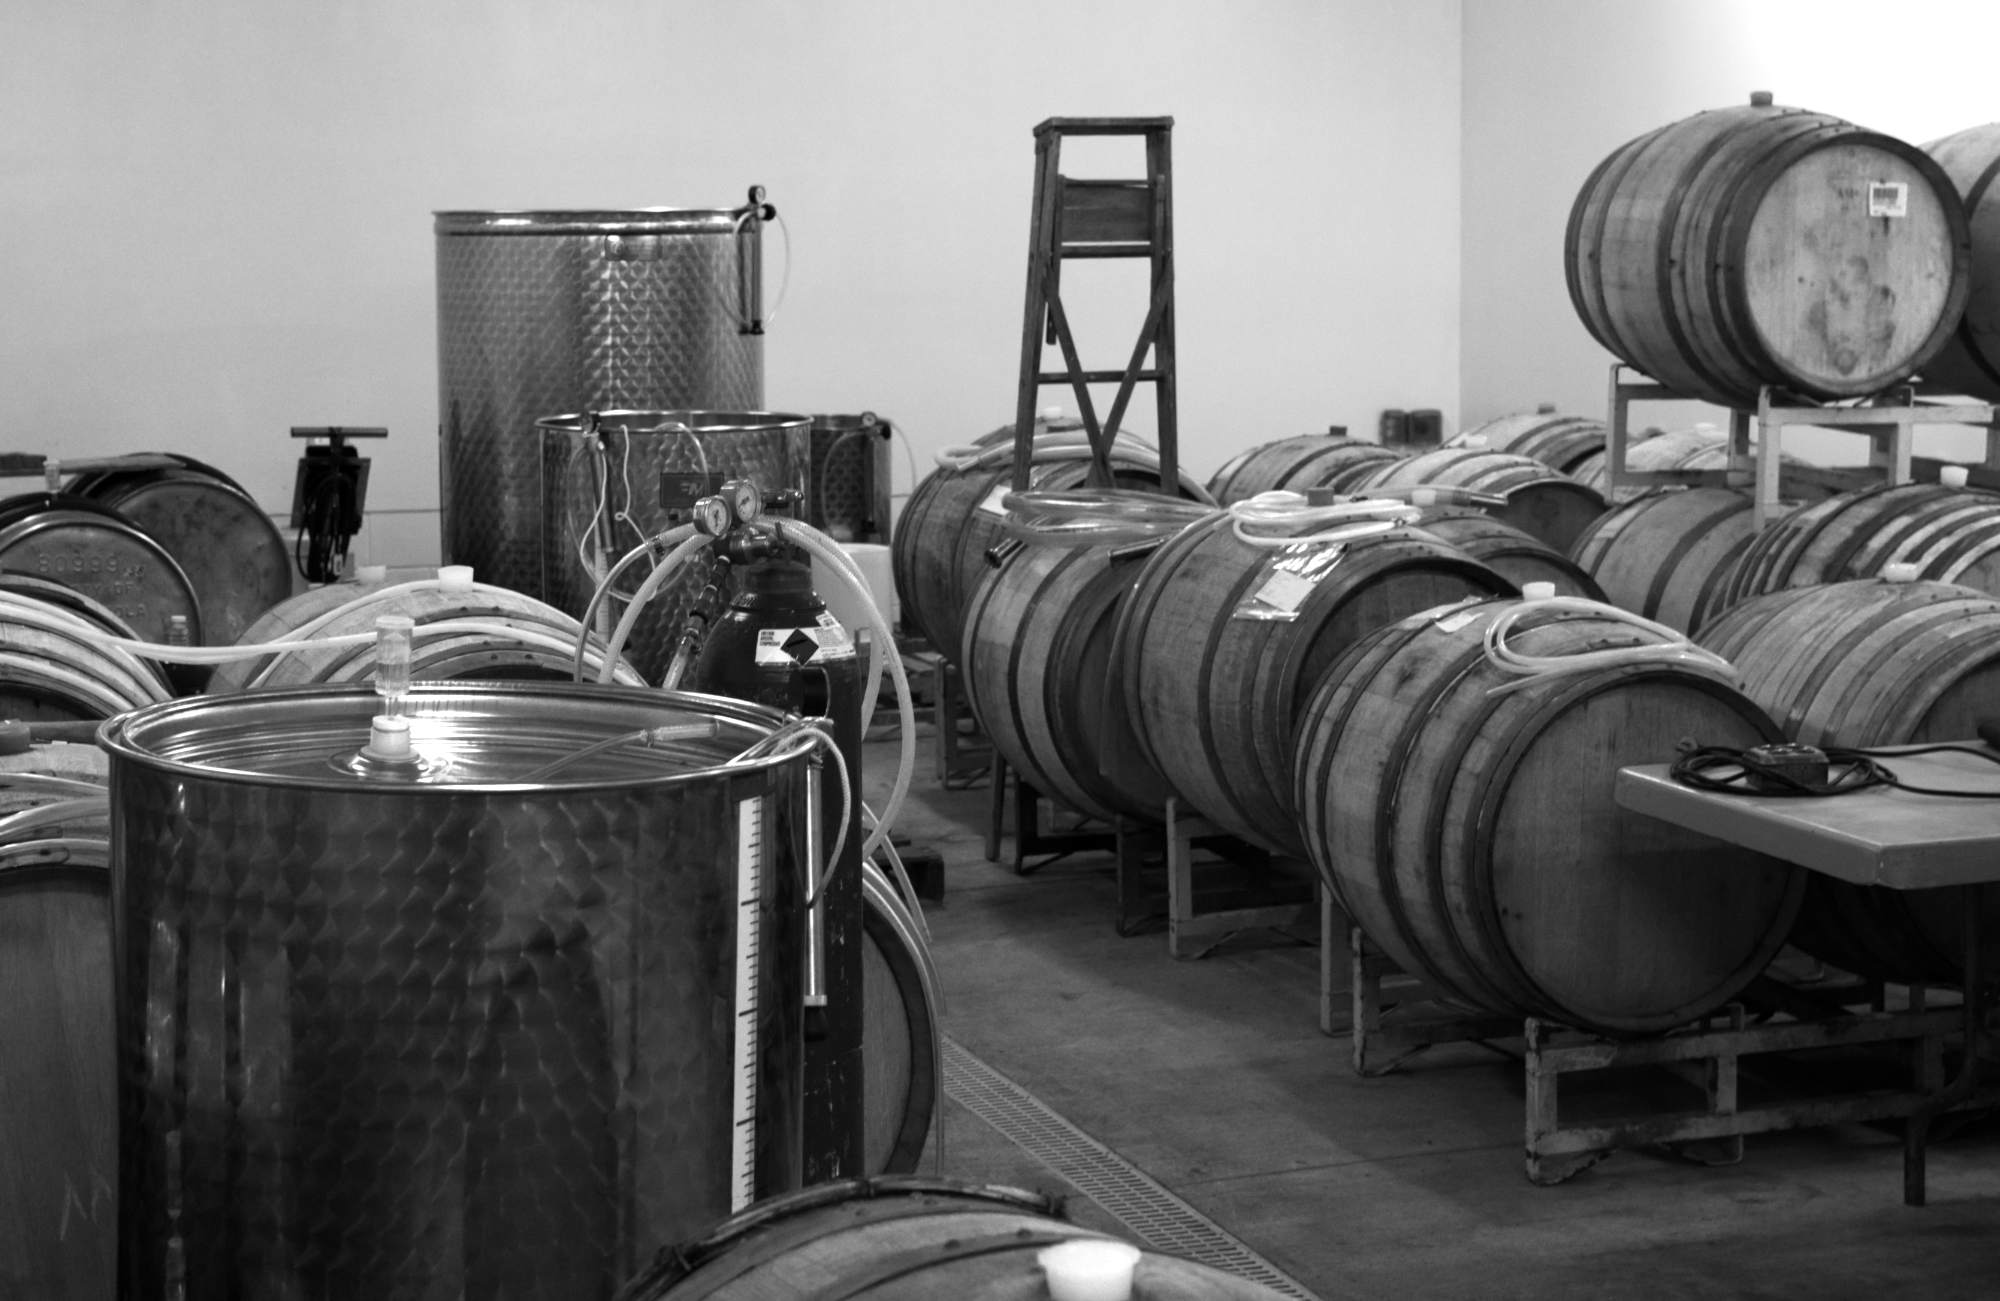 Wine barrels in the wine making room